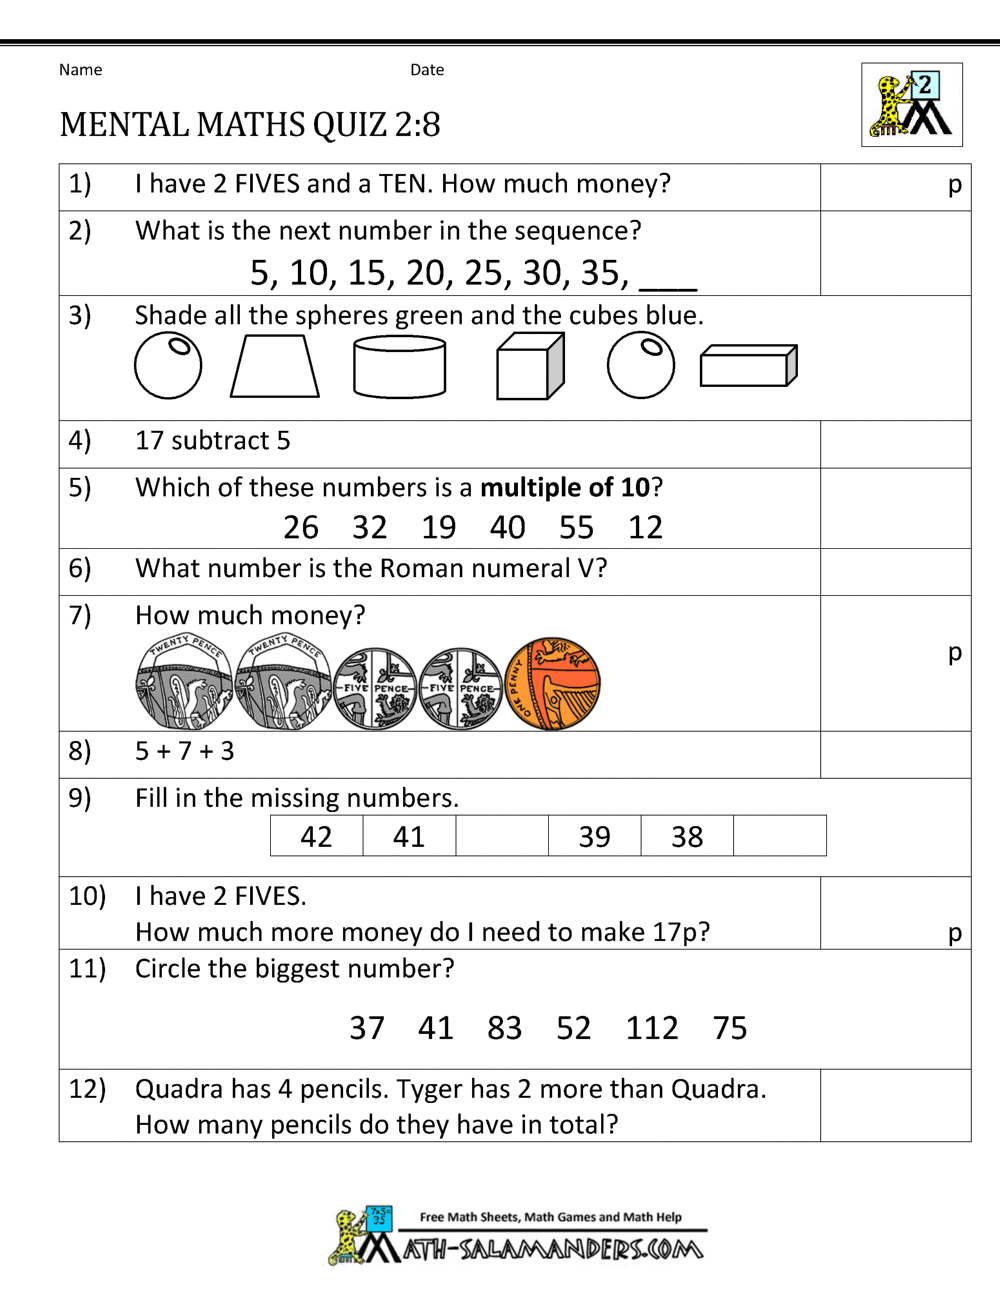 maths homework sheets pdf